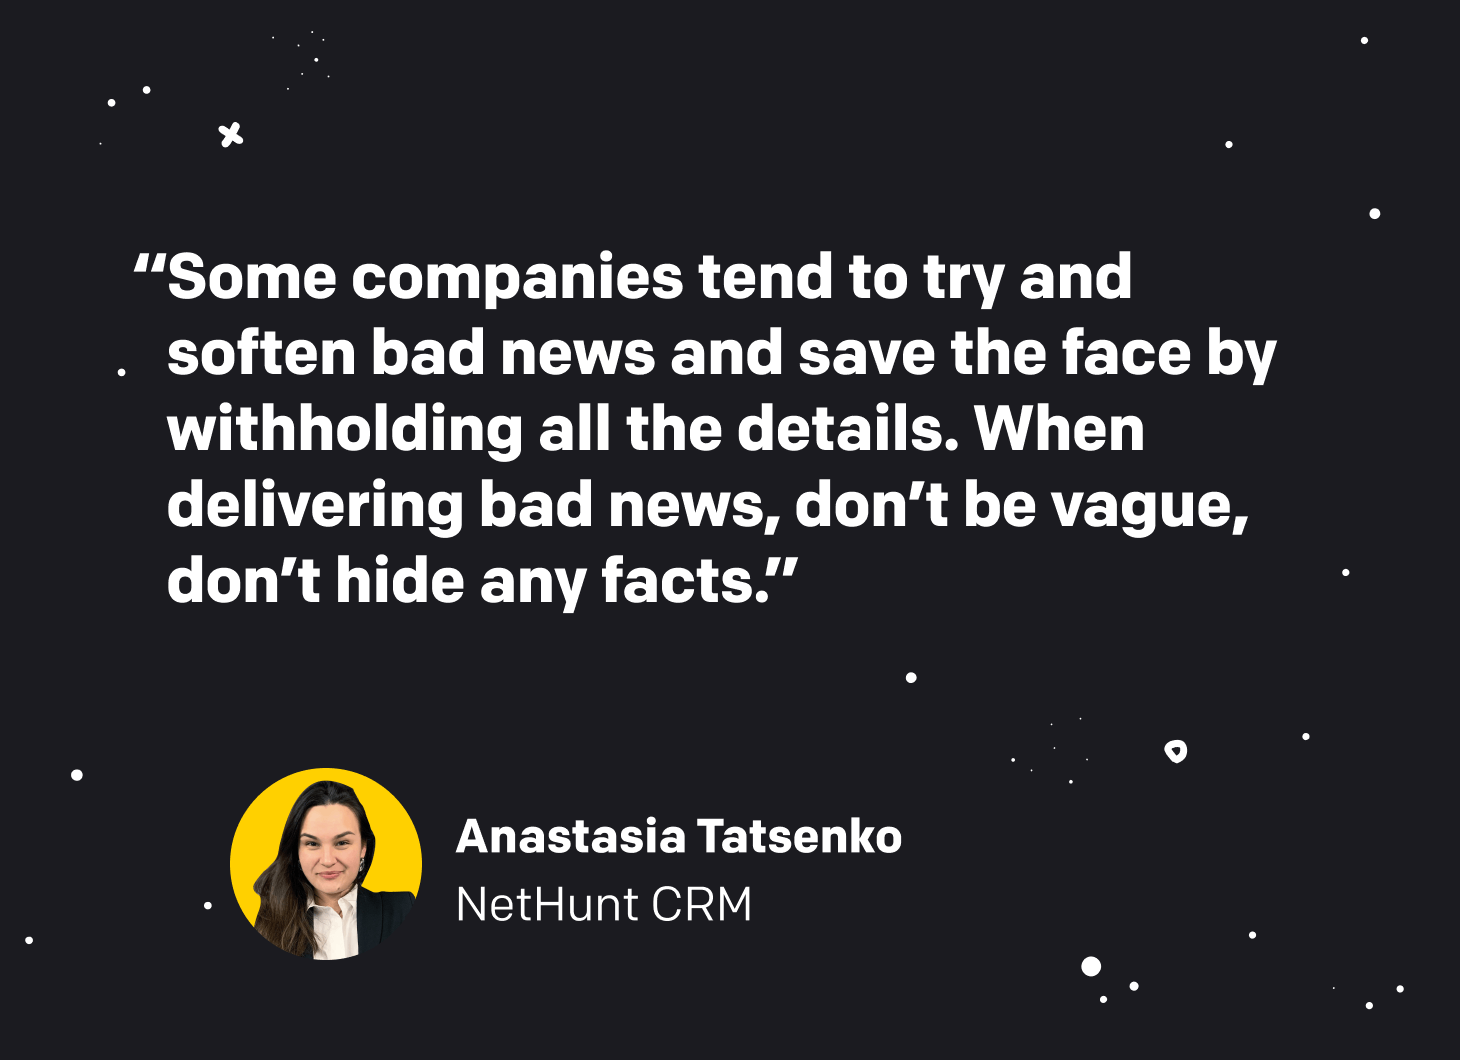 Quote from Anastasia Tatsenko from NetHunt CRM.